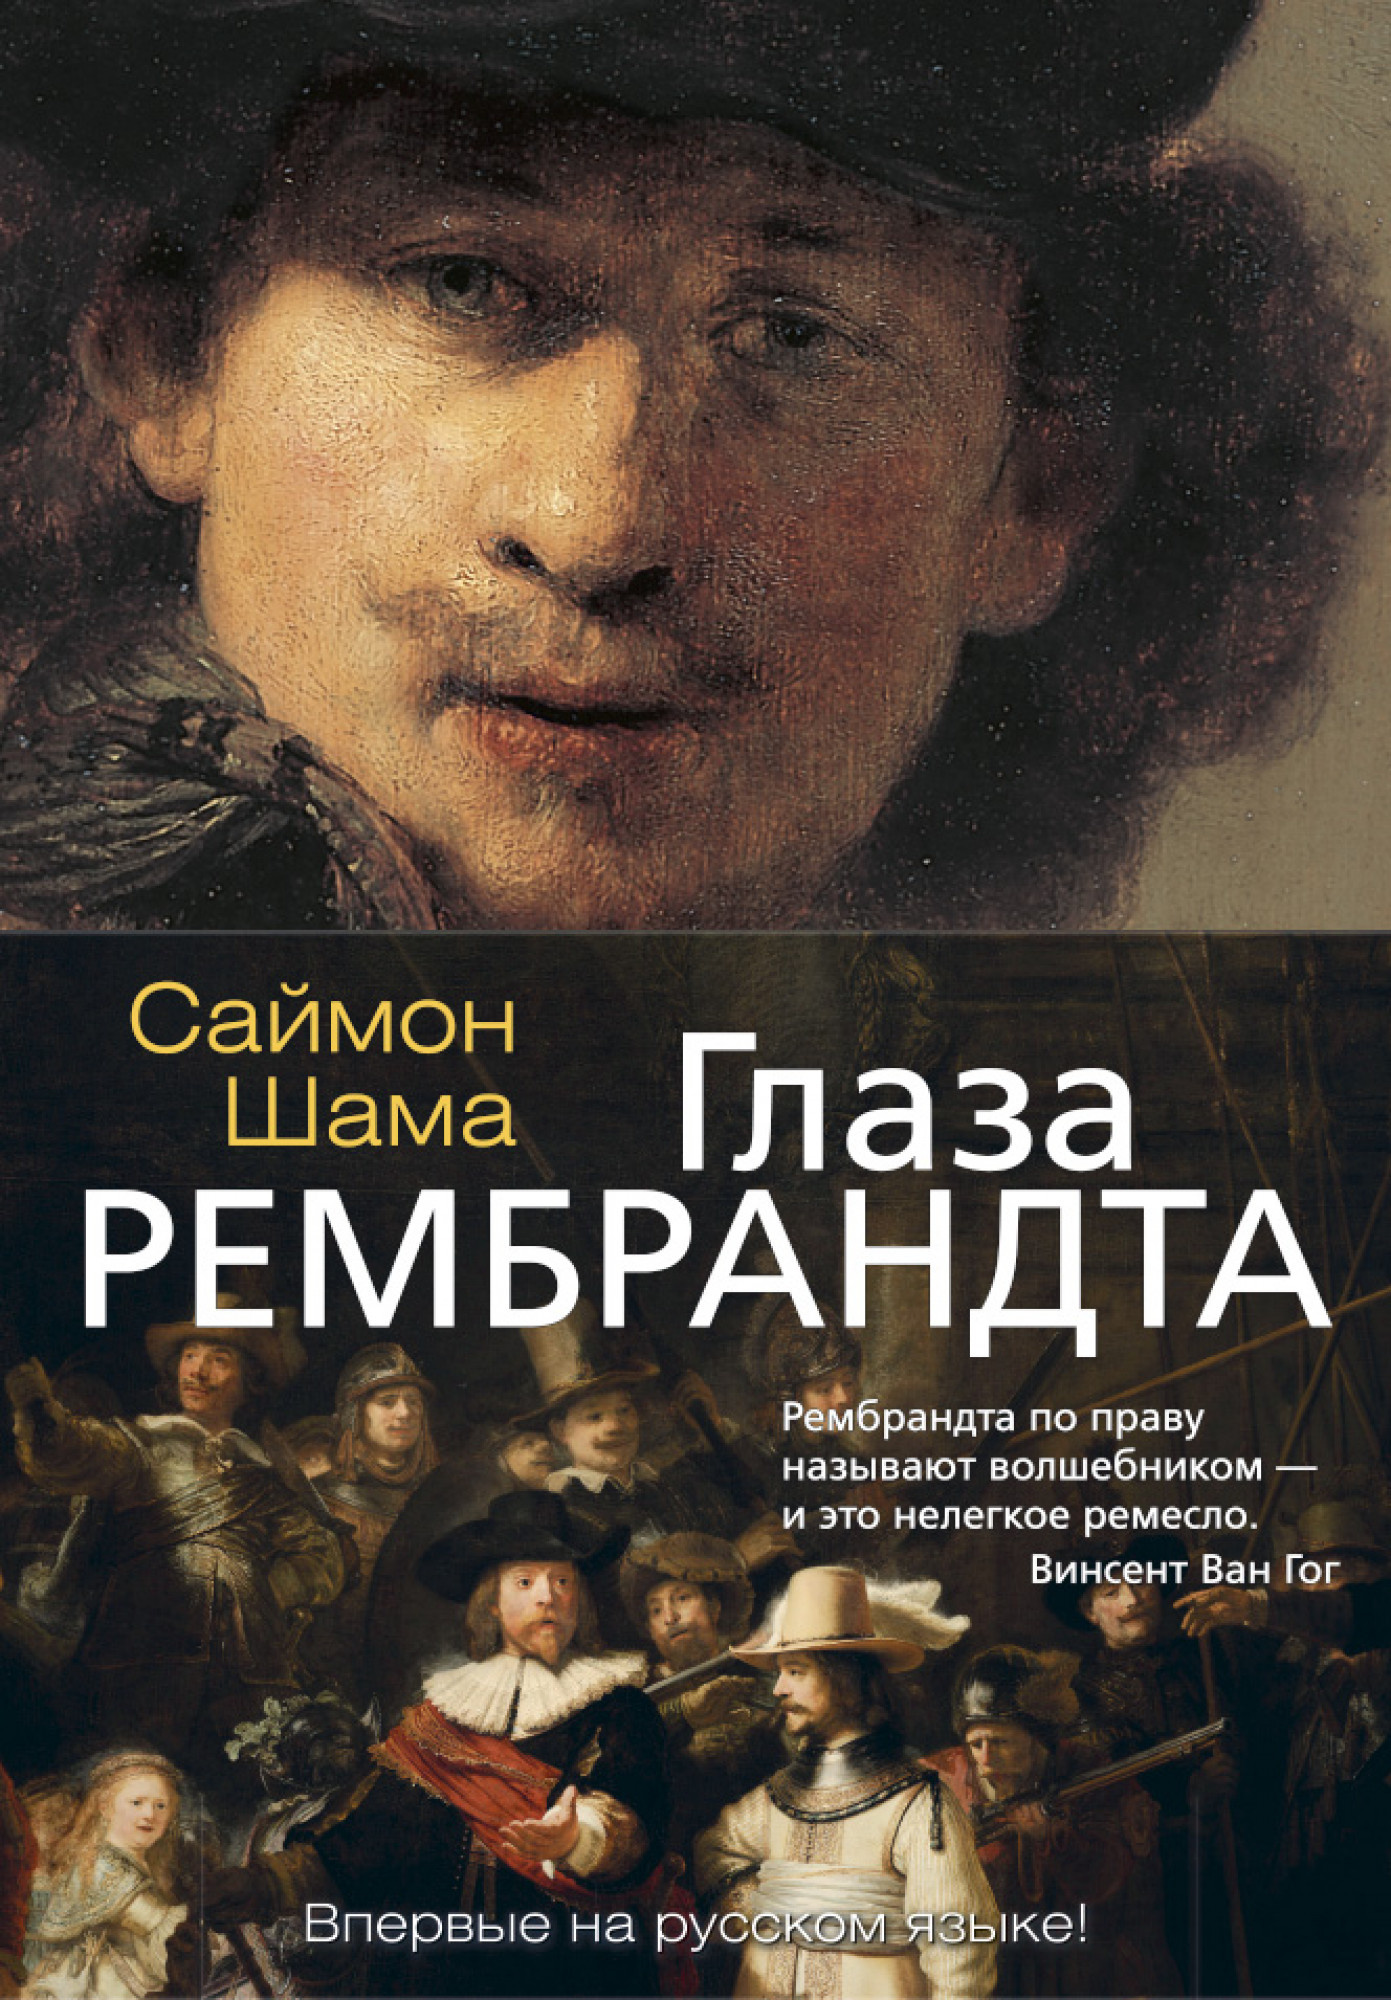 Глаза Рембрандта. Автор — Саймон Шама. 